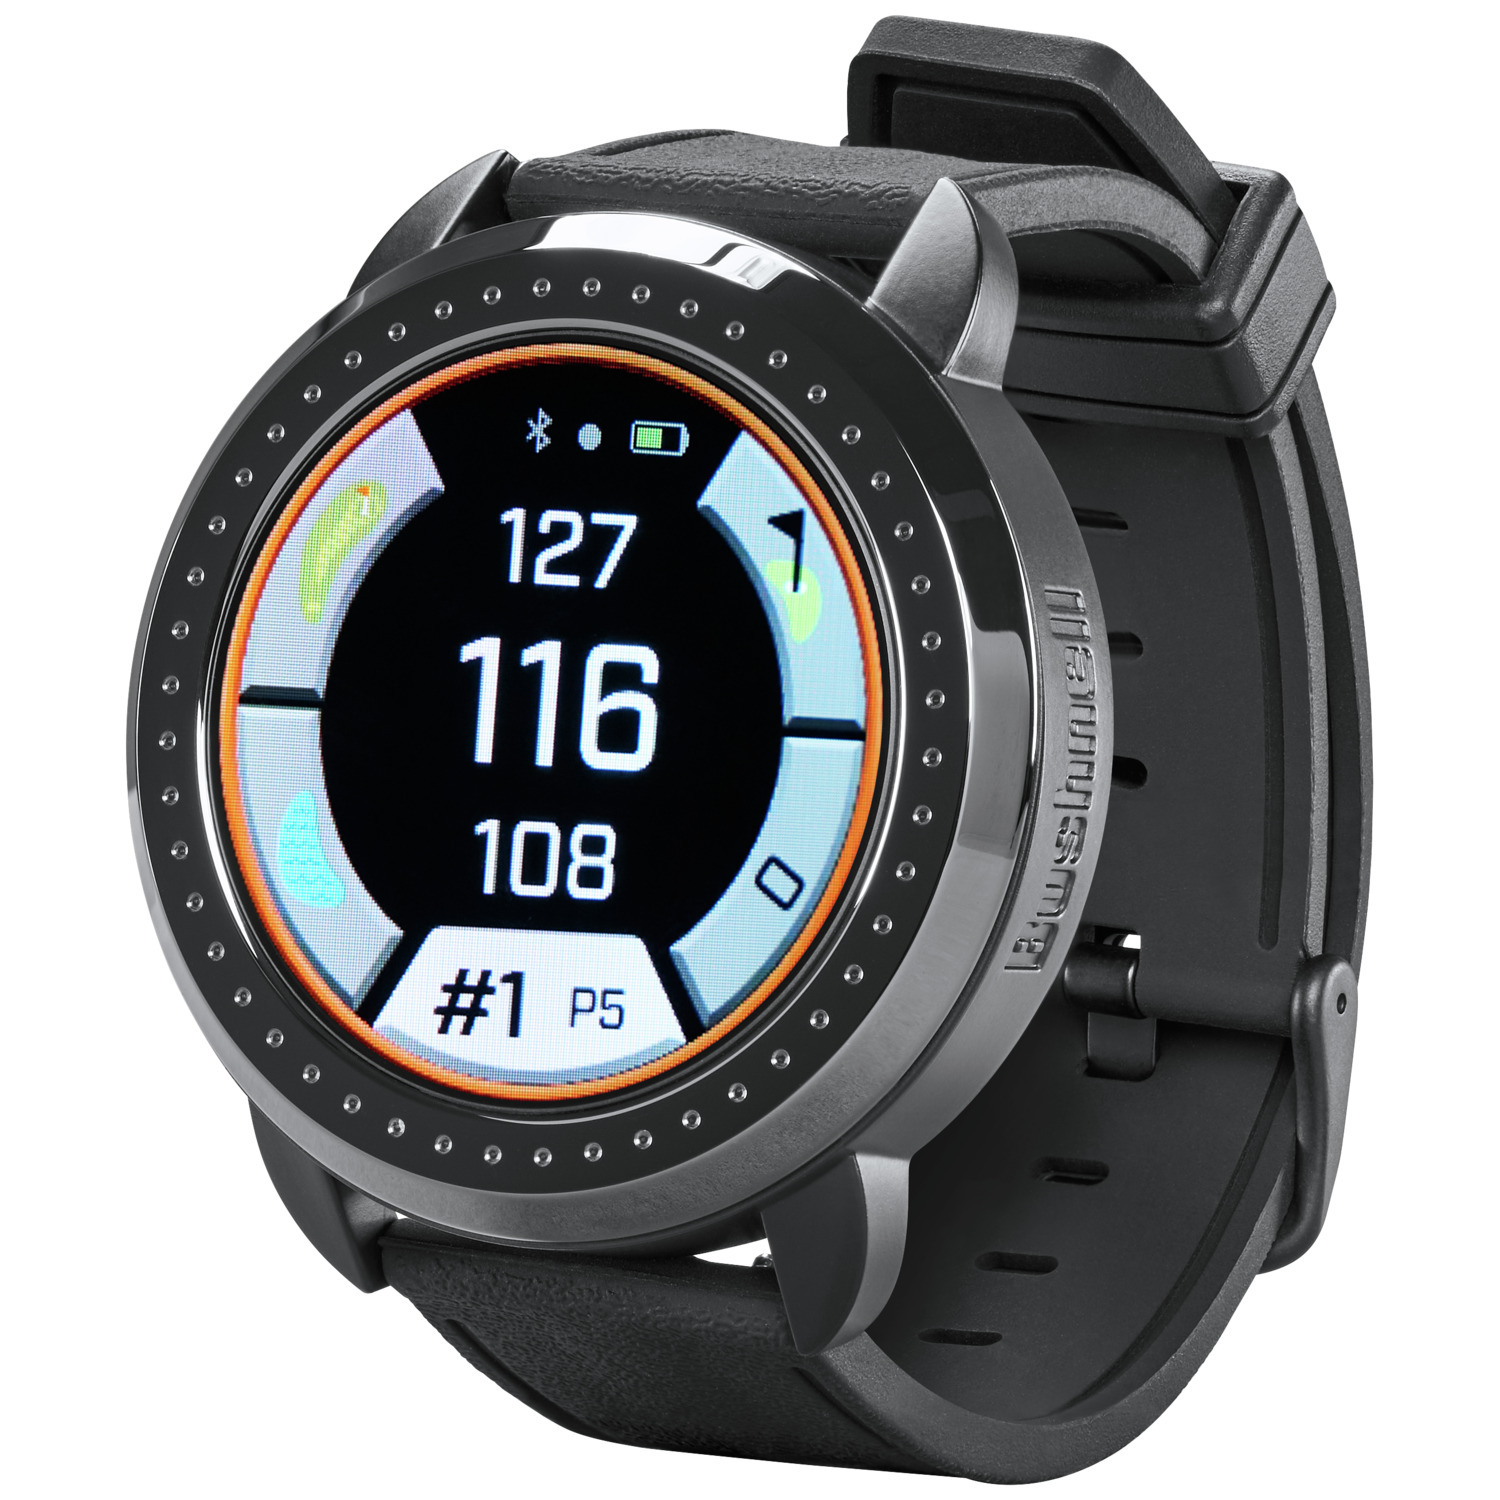 Bushnell Golf ION Elite GPS Watch Color Touchscreen Slope Distances Black